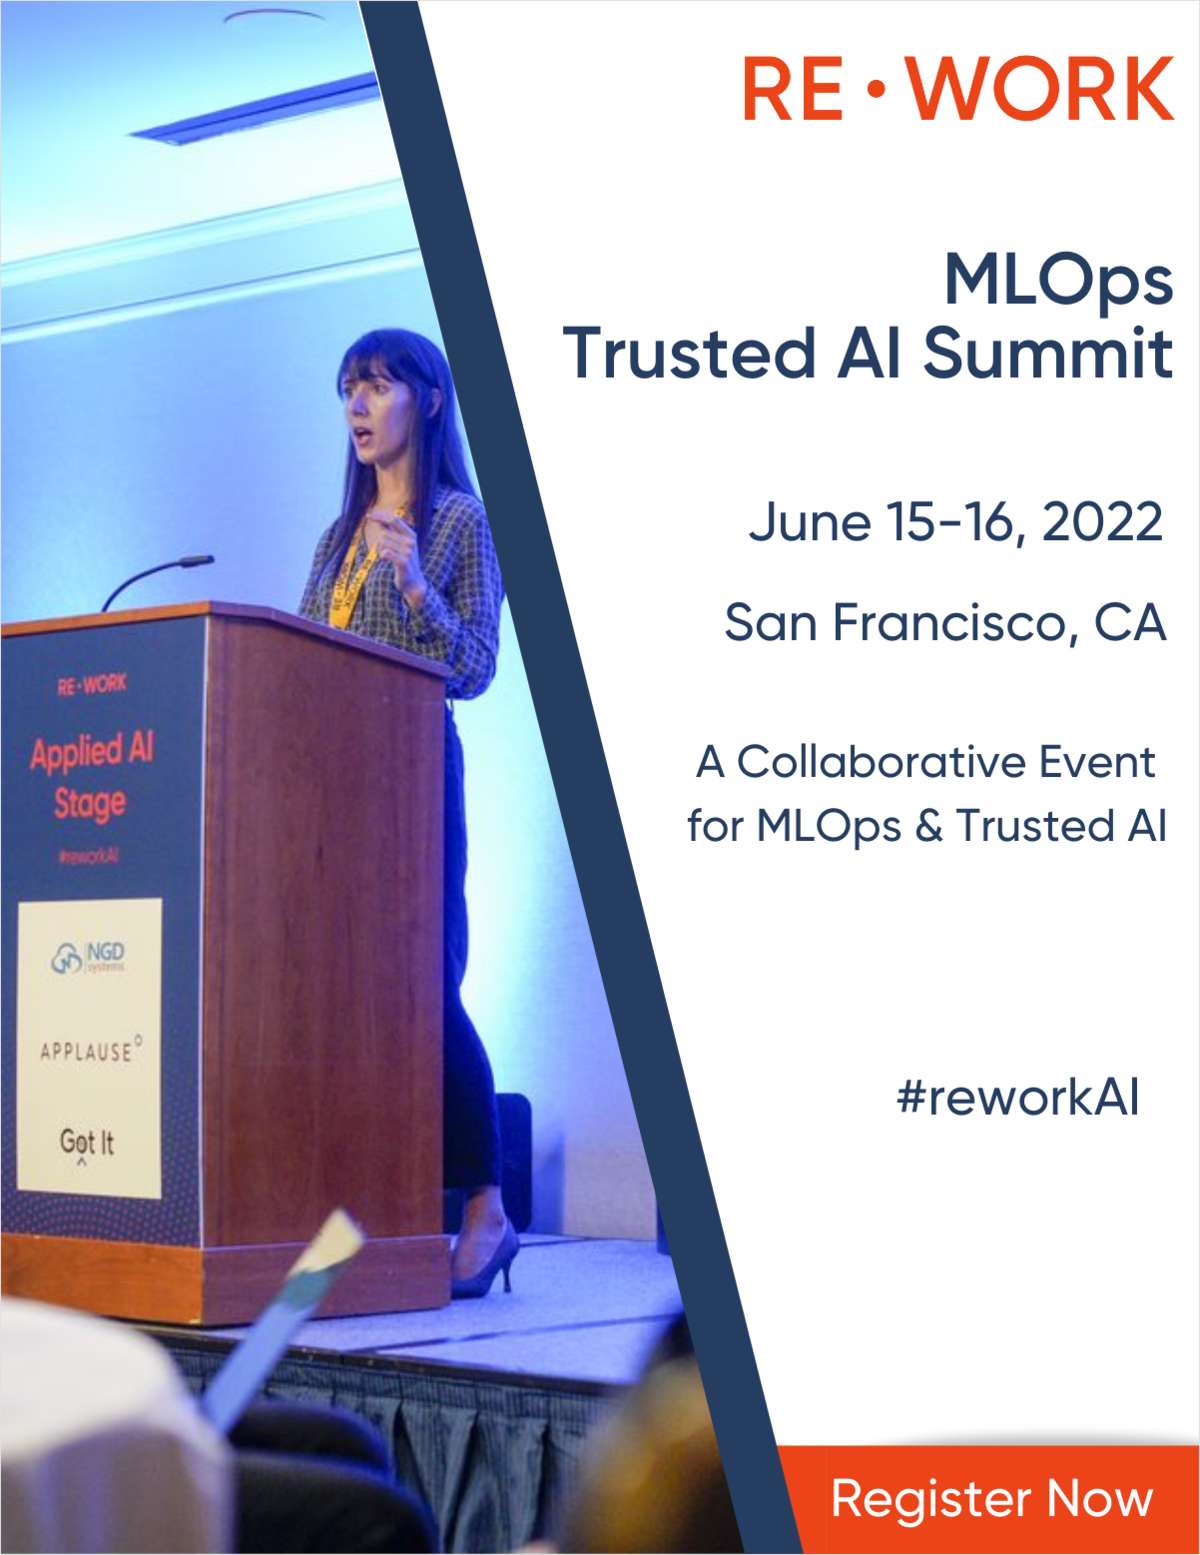 REWORK MLOps Trusted AI Summit 2022